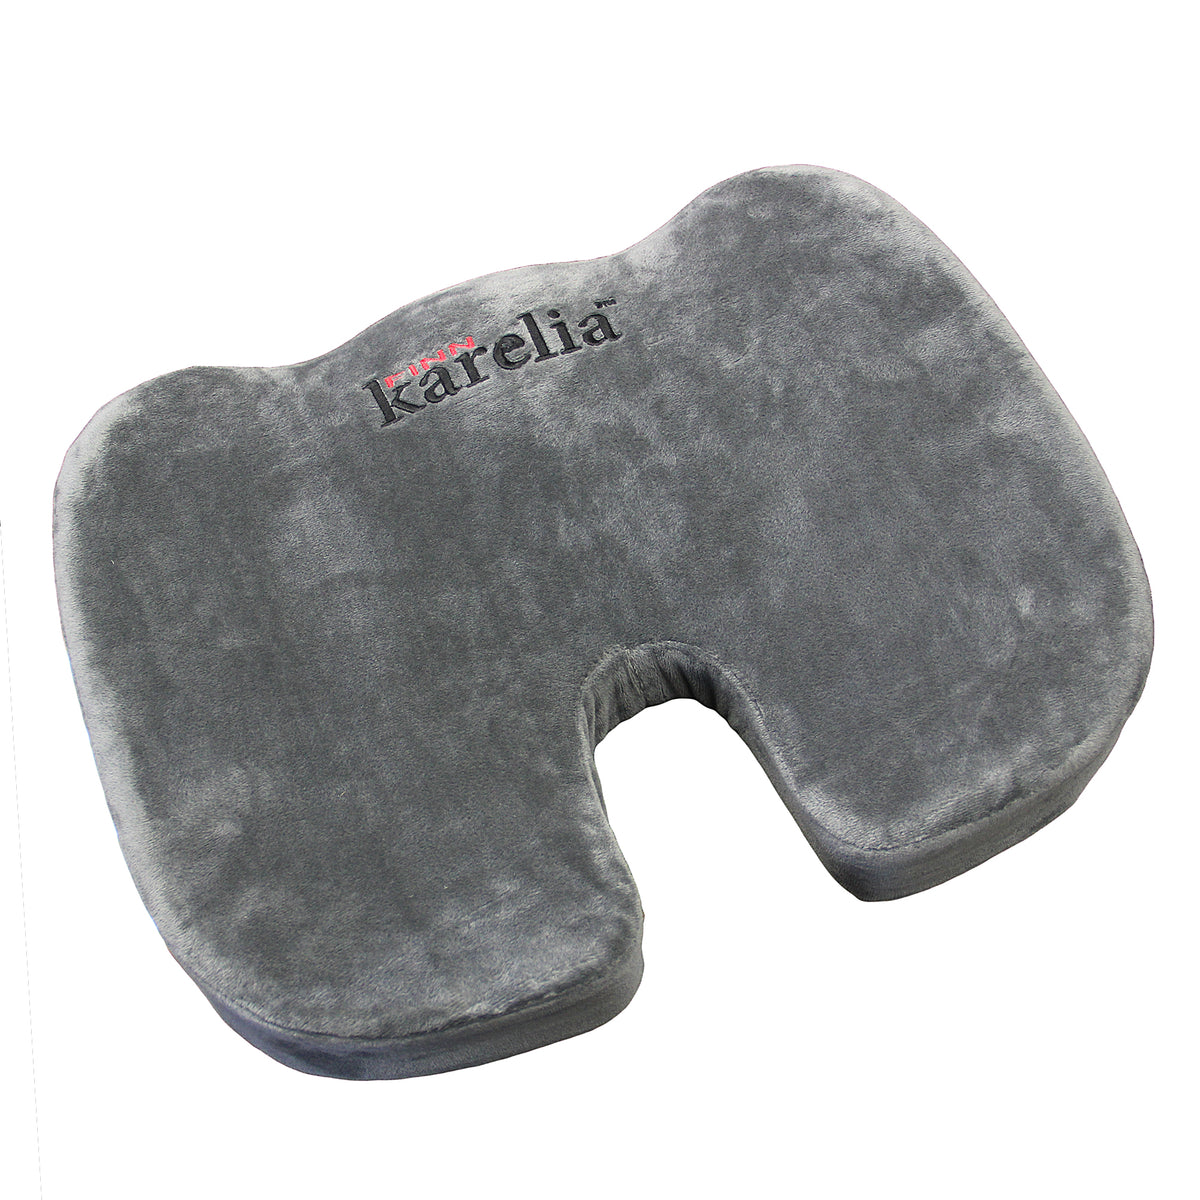 Memory Foam Lumbar Pillow for Car or Office Chair - Gray, Medium - Back Pain